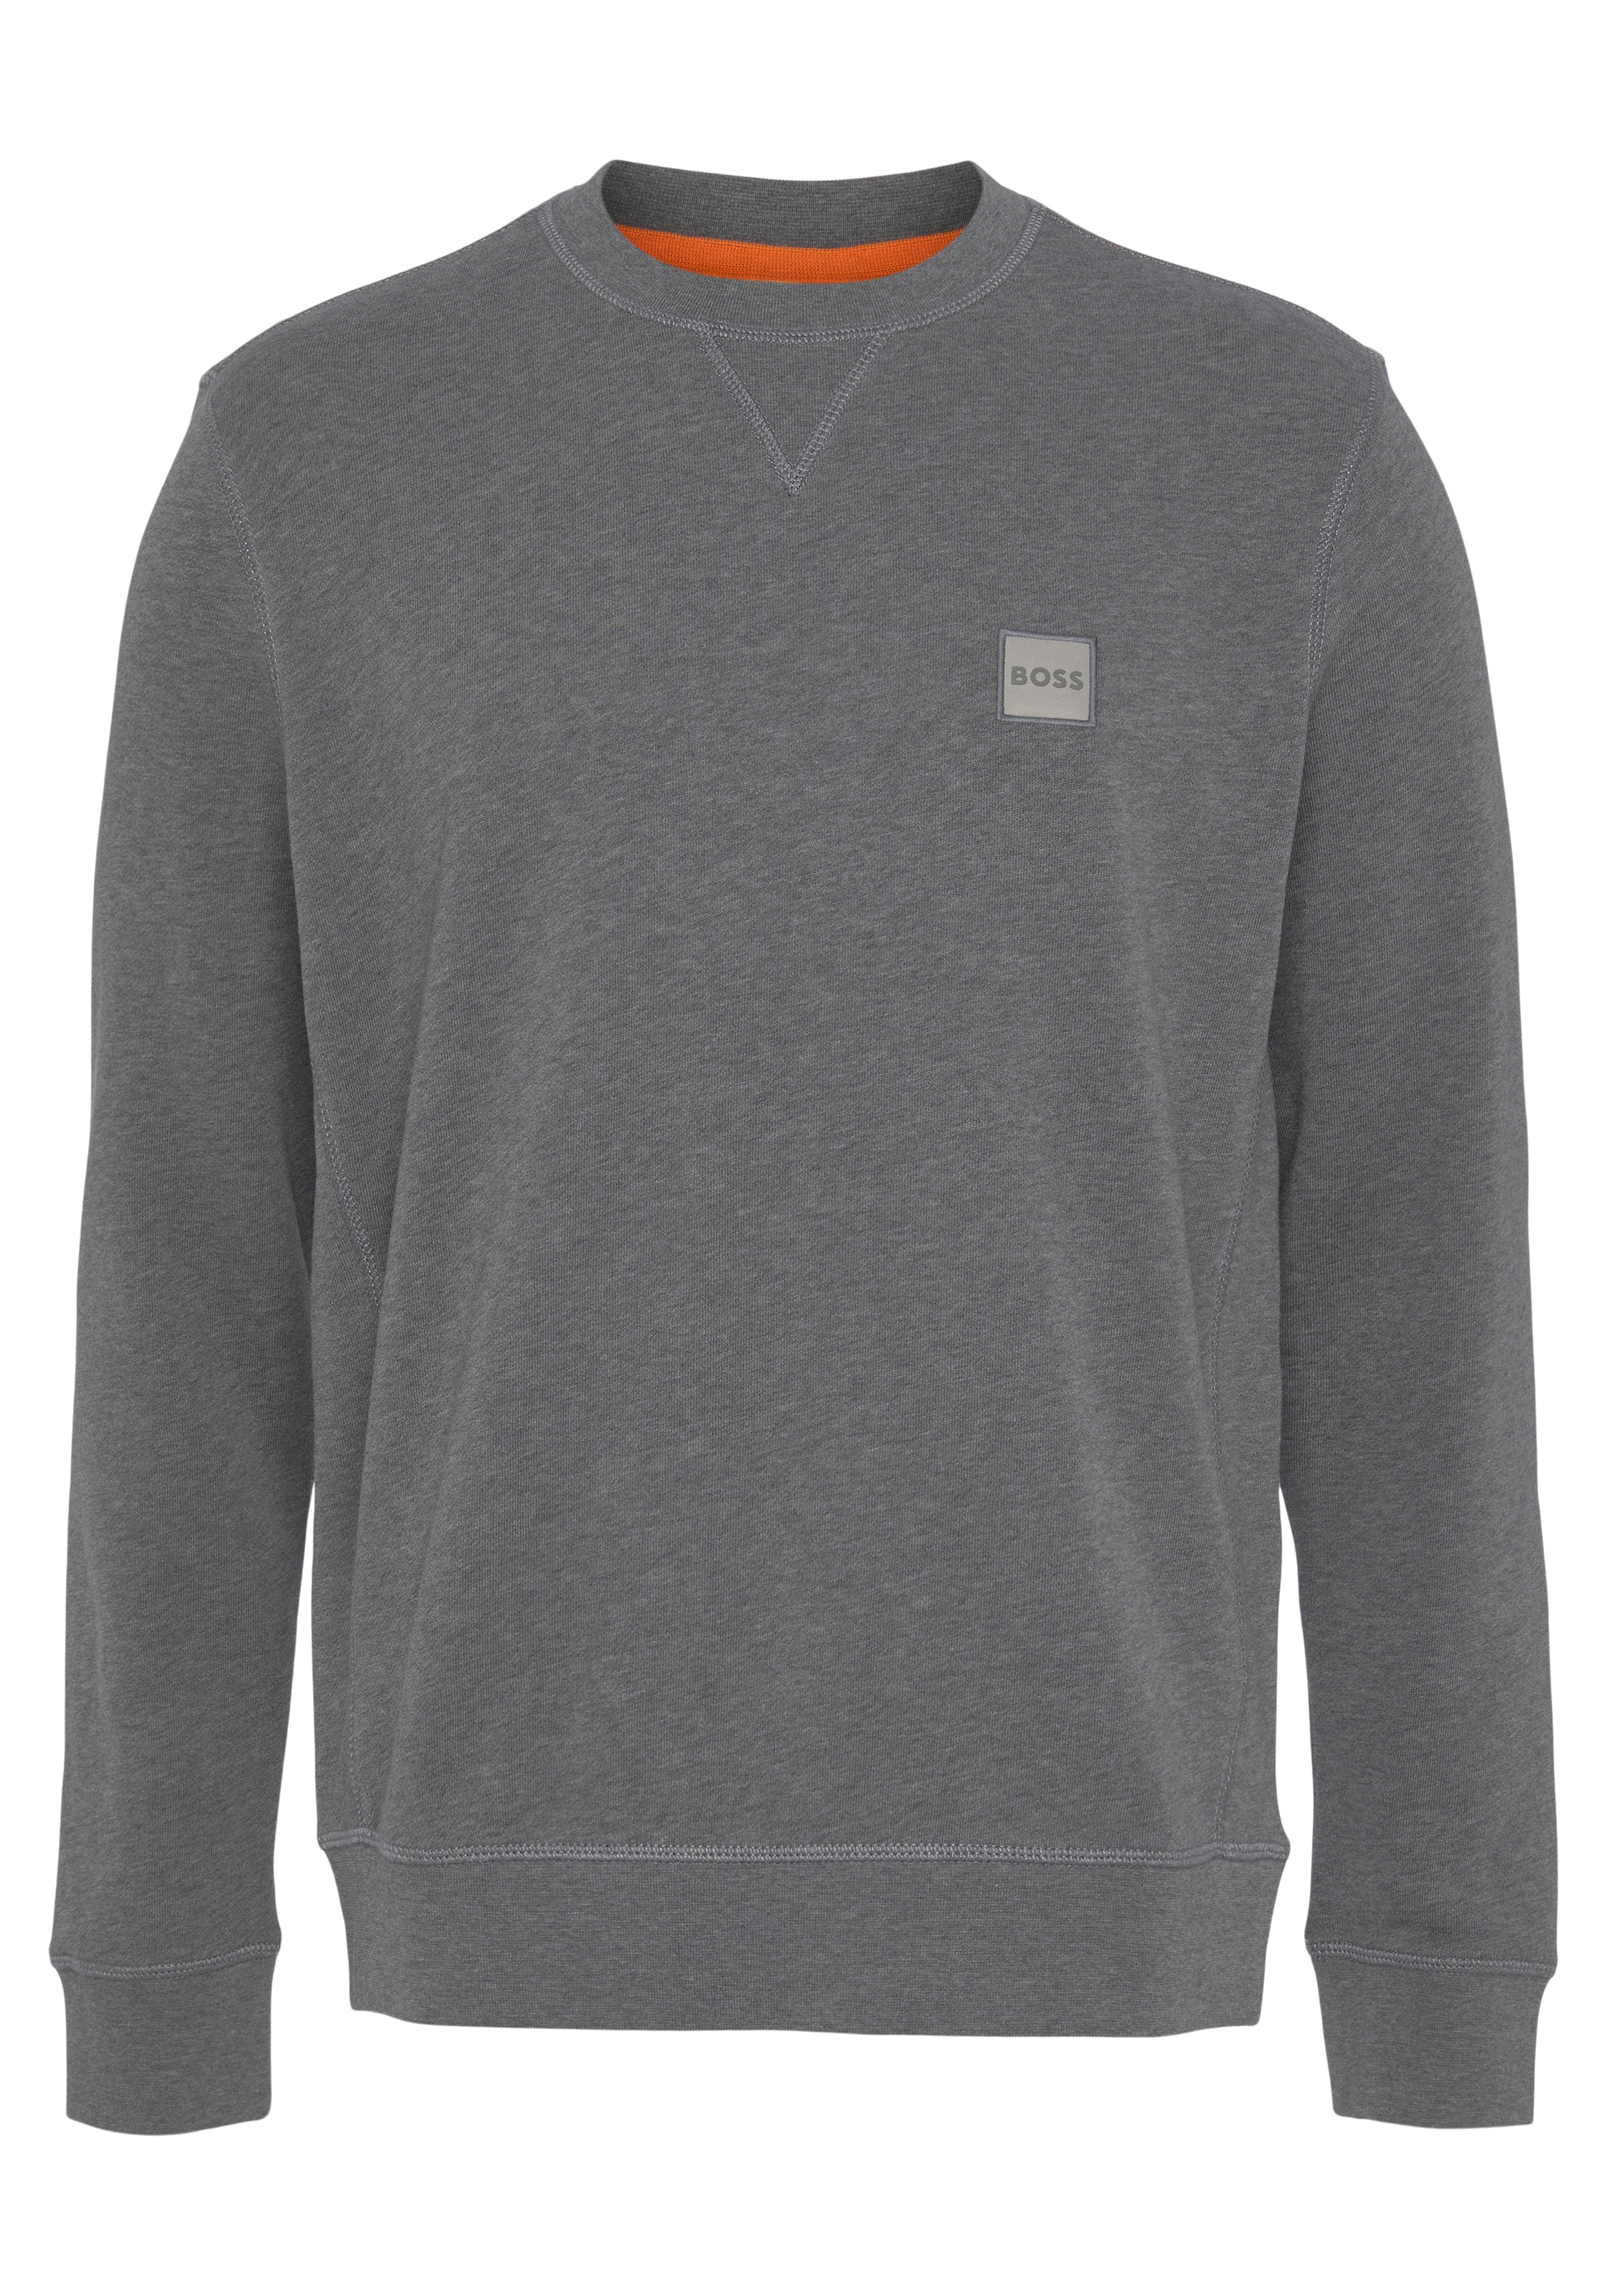 ORANGE aufgesticktem shoppen BOSS online »Westart«, BOSS mit Logo bei OTTO Sweatshirt